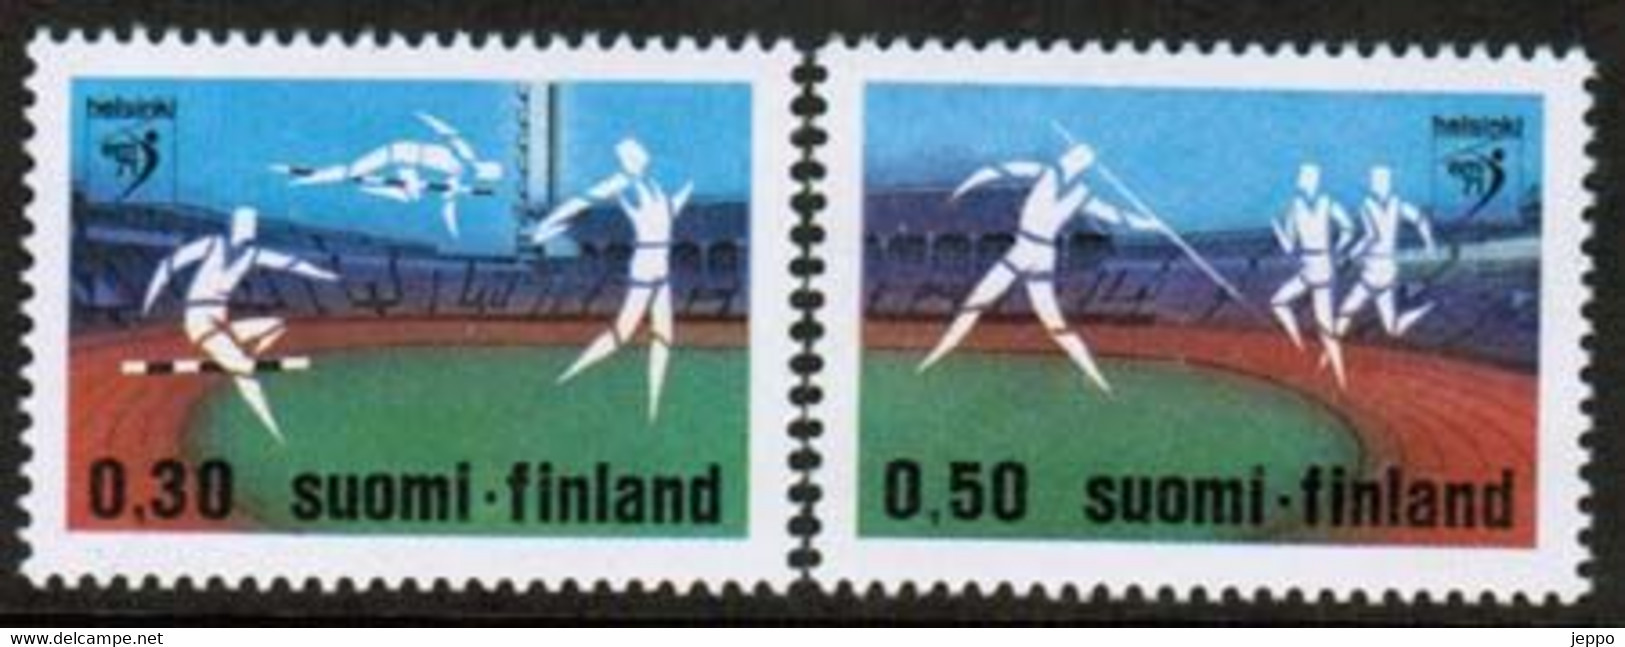 1971 Finland European Athletic Shampionships Complete Set MNH. - Neufs